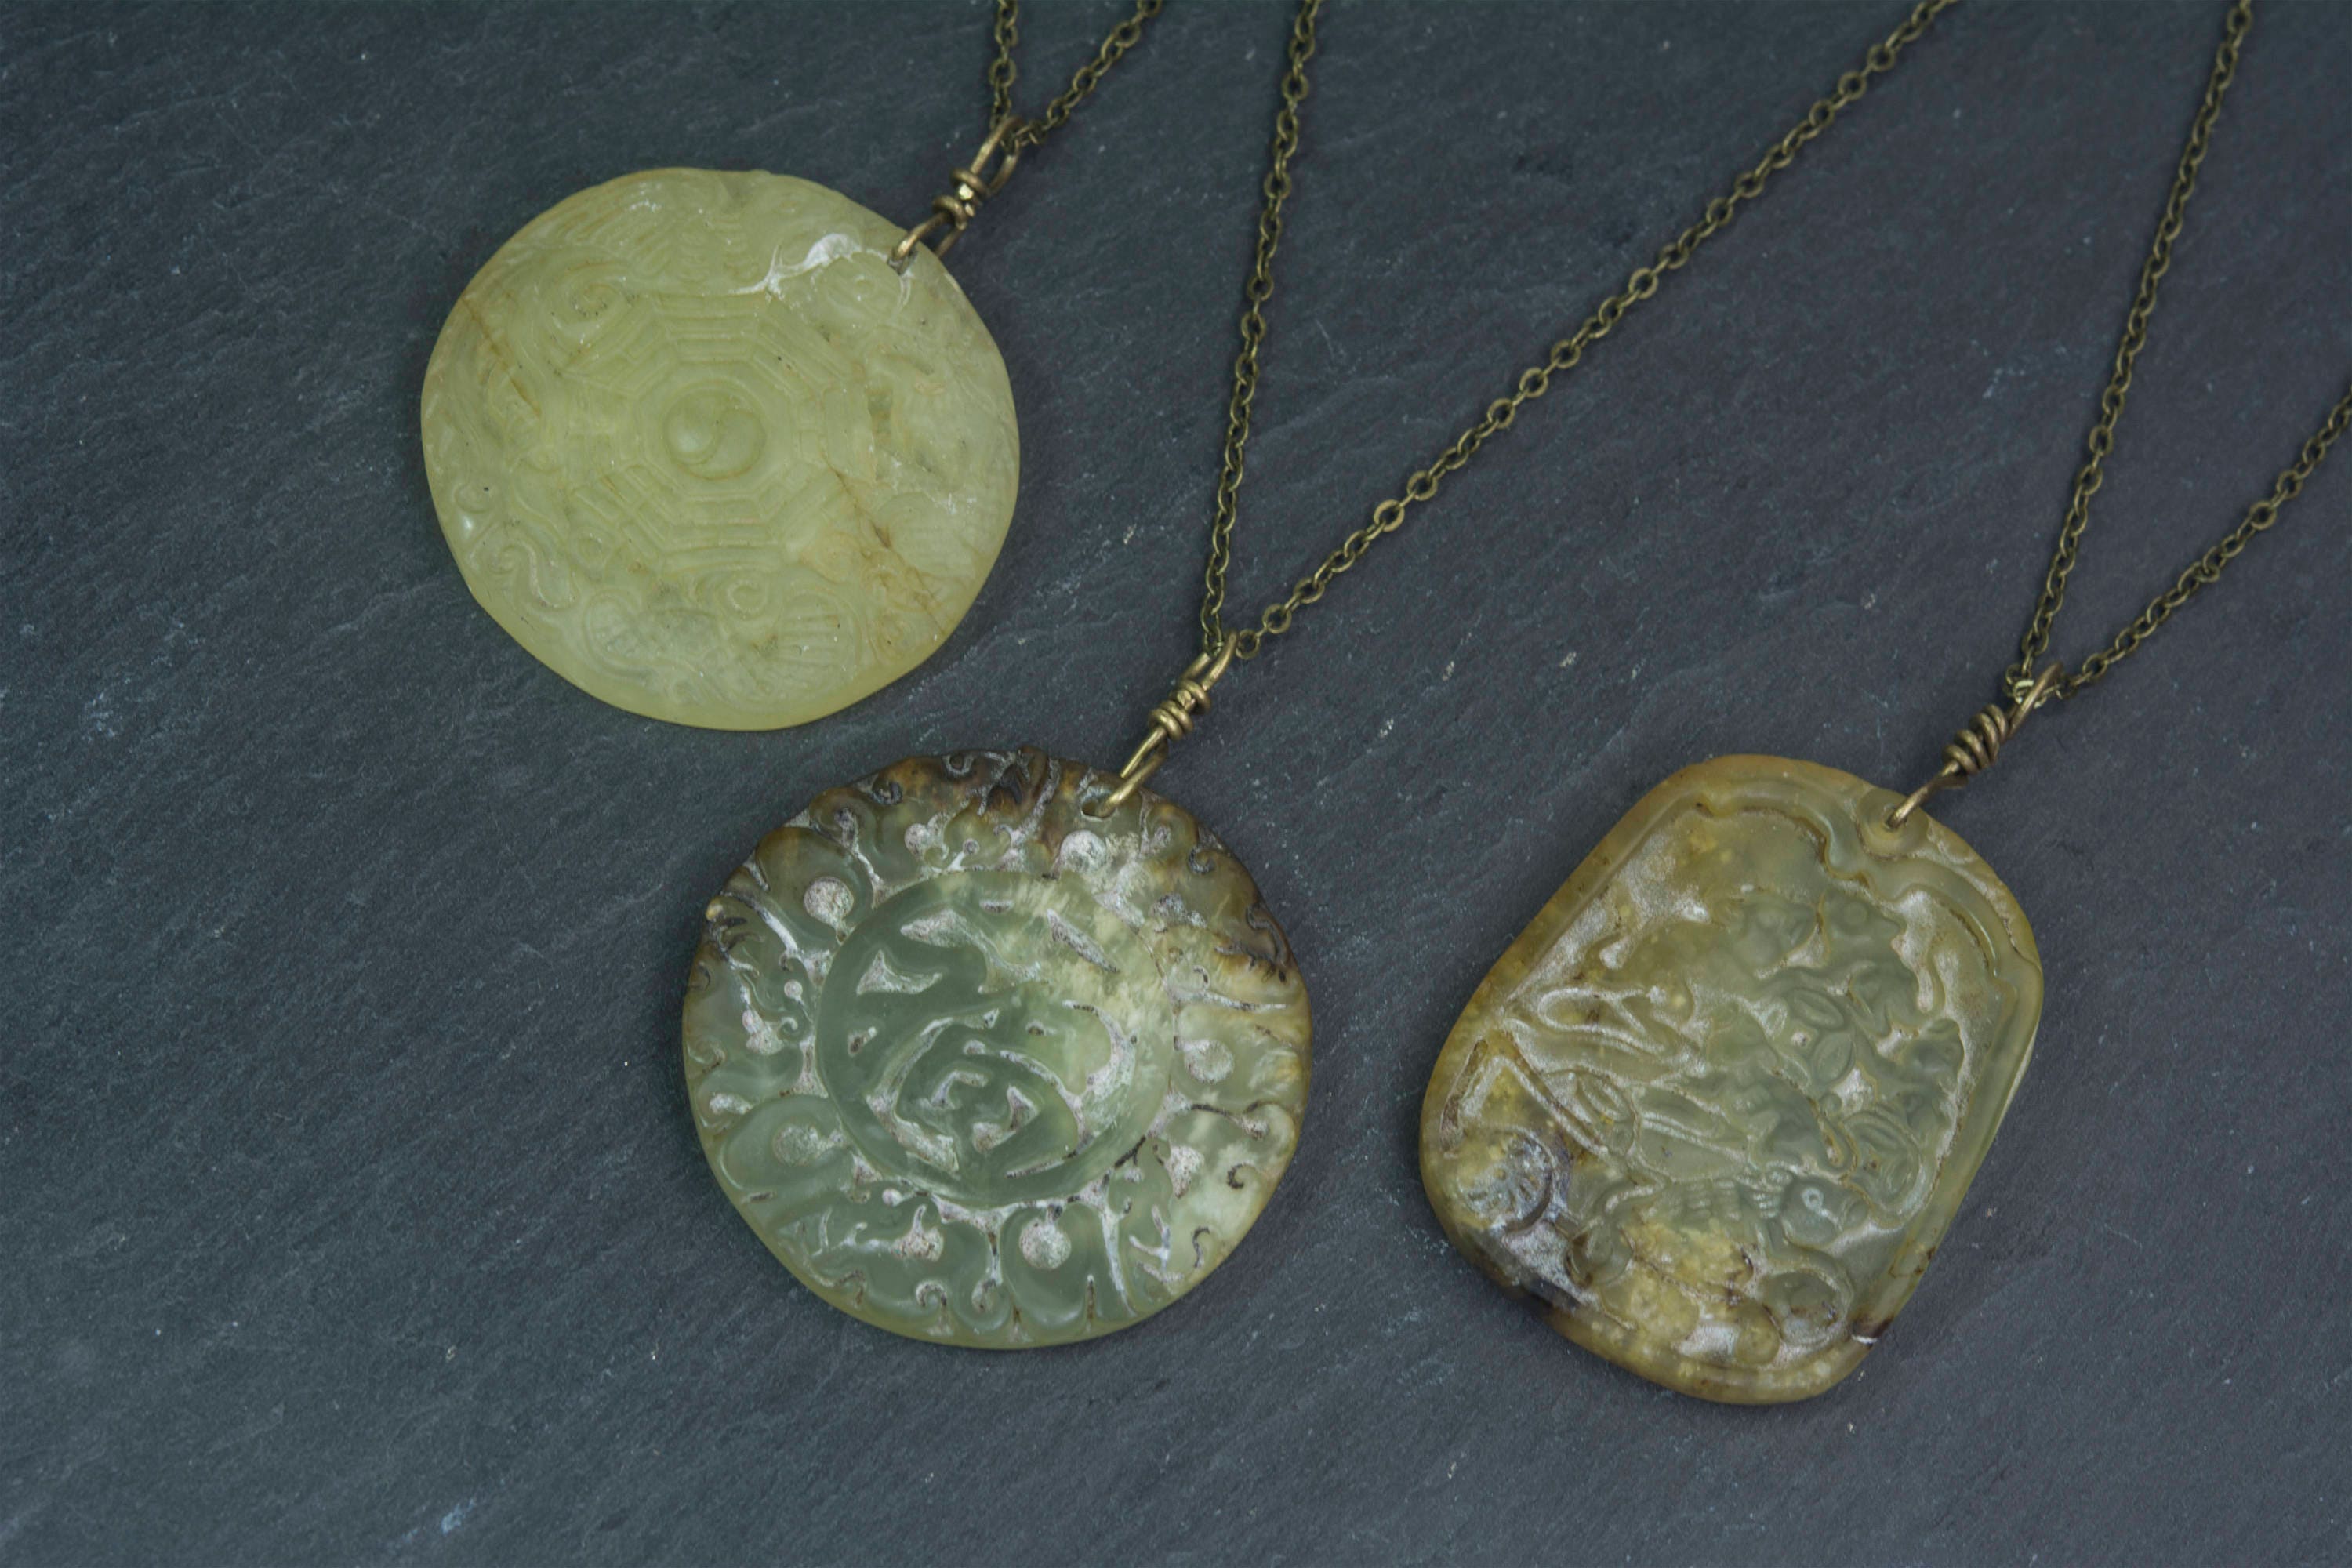 Chinese jade pendant stock photo. Image of texture, china - 31457504